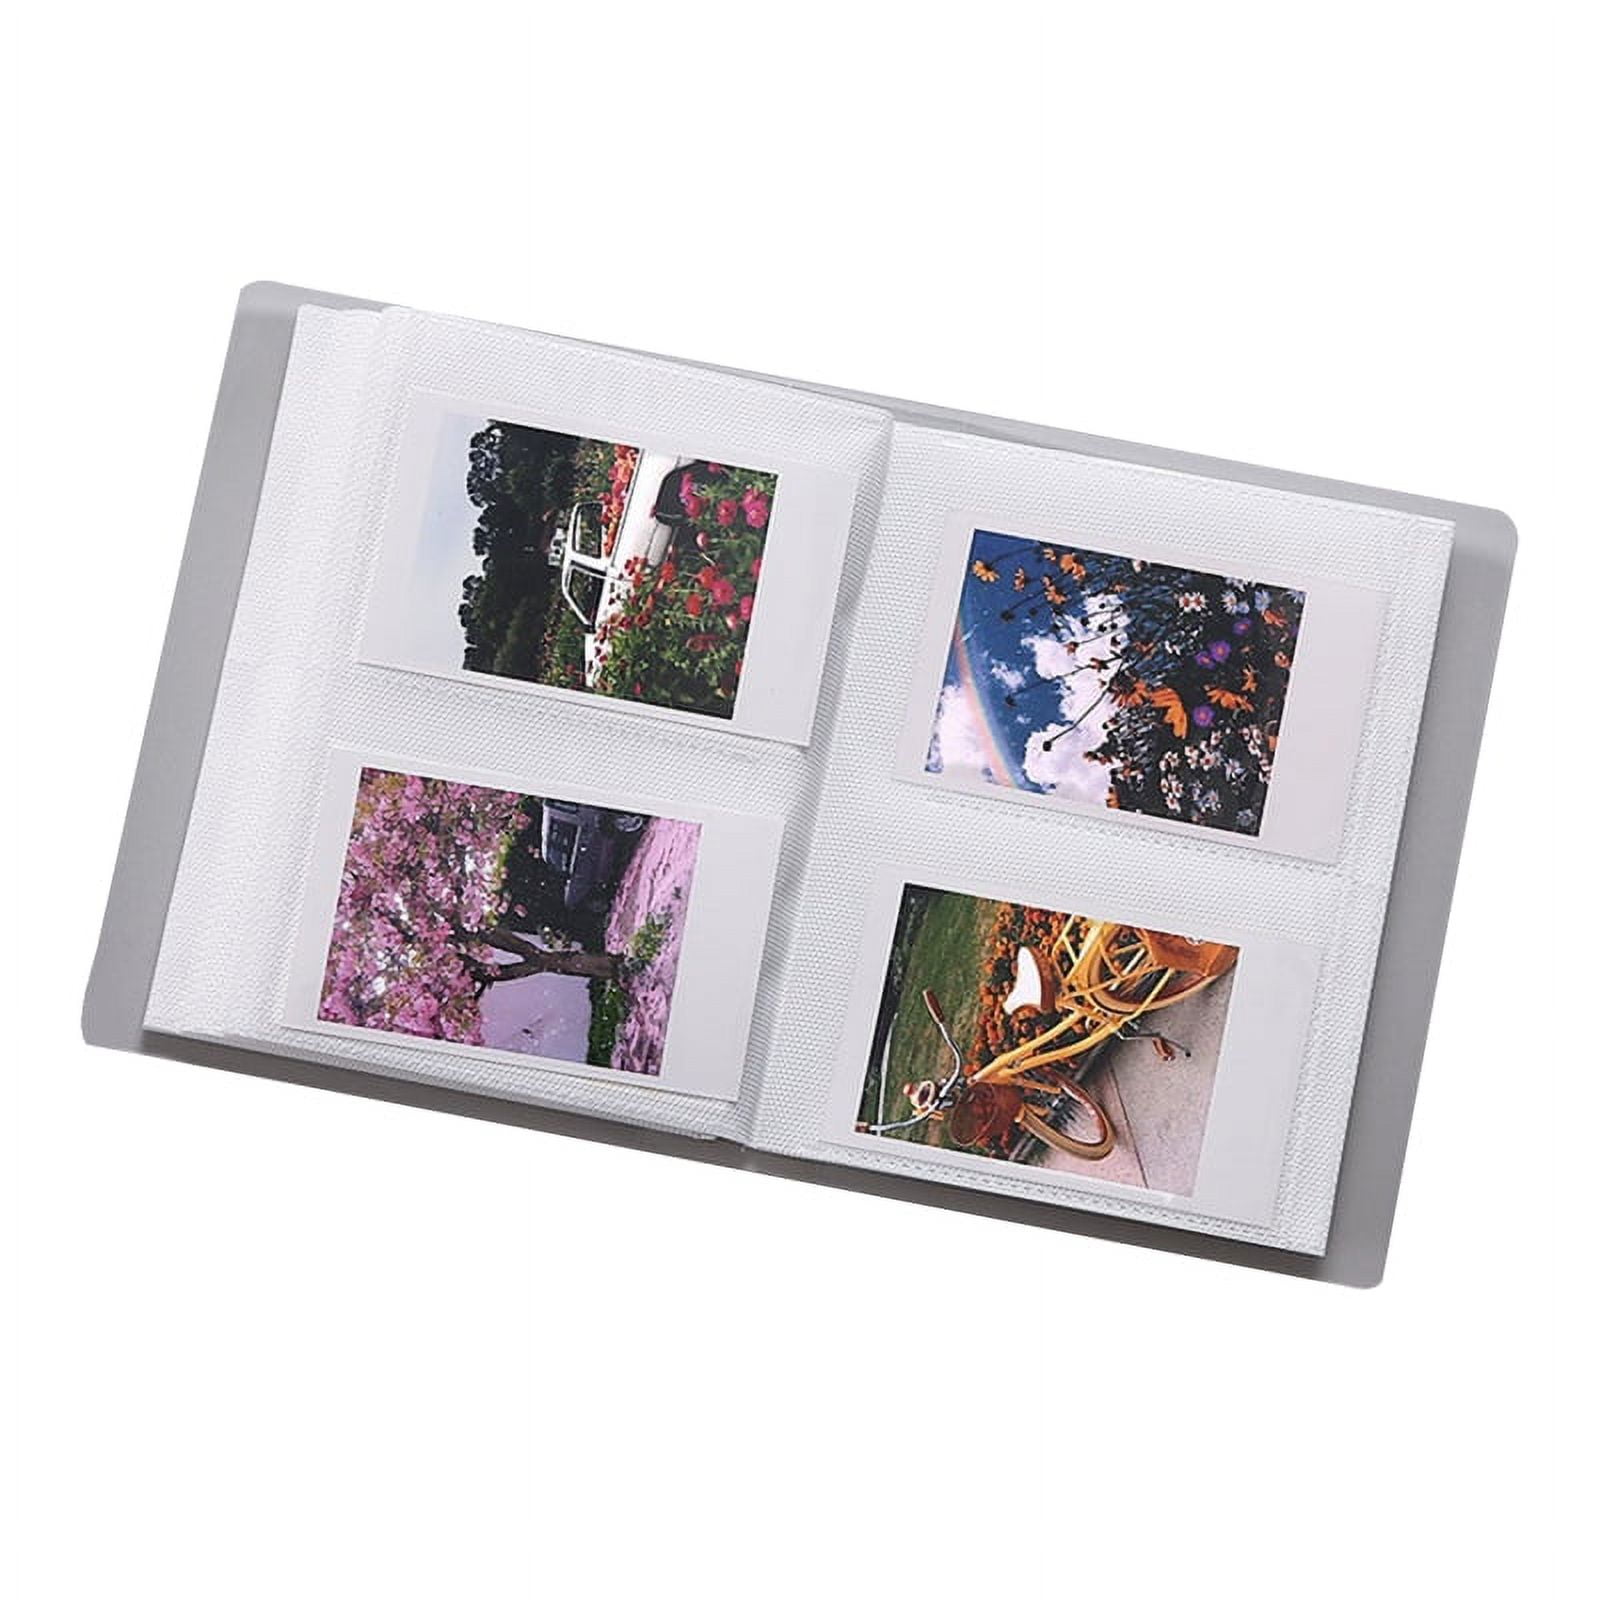 Instax Mini Photo Album 432 Vertical Photos, Polaroid Photo Album 2x3  Compatible with Fujifilm Instax Mini Film Evo 40 